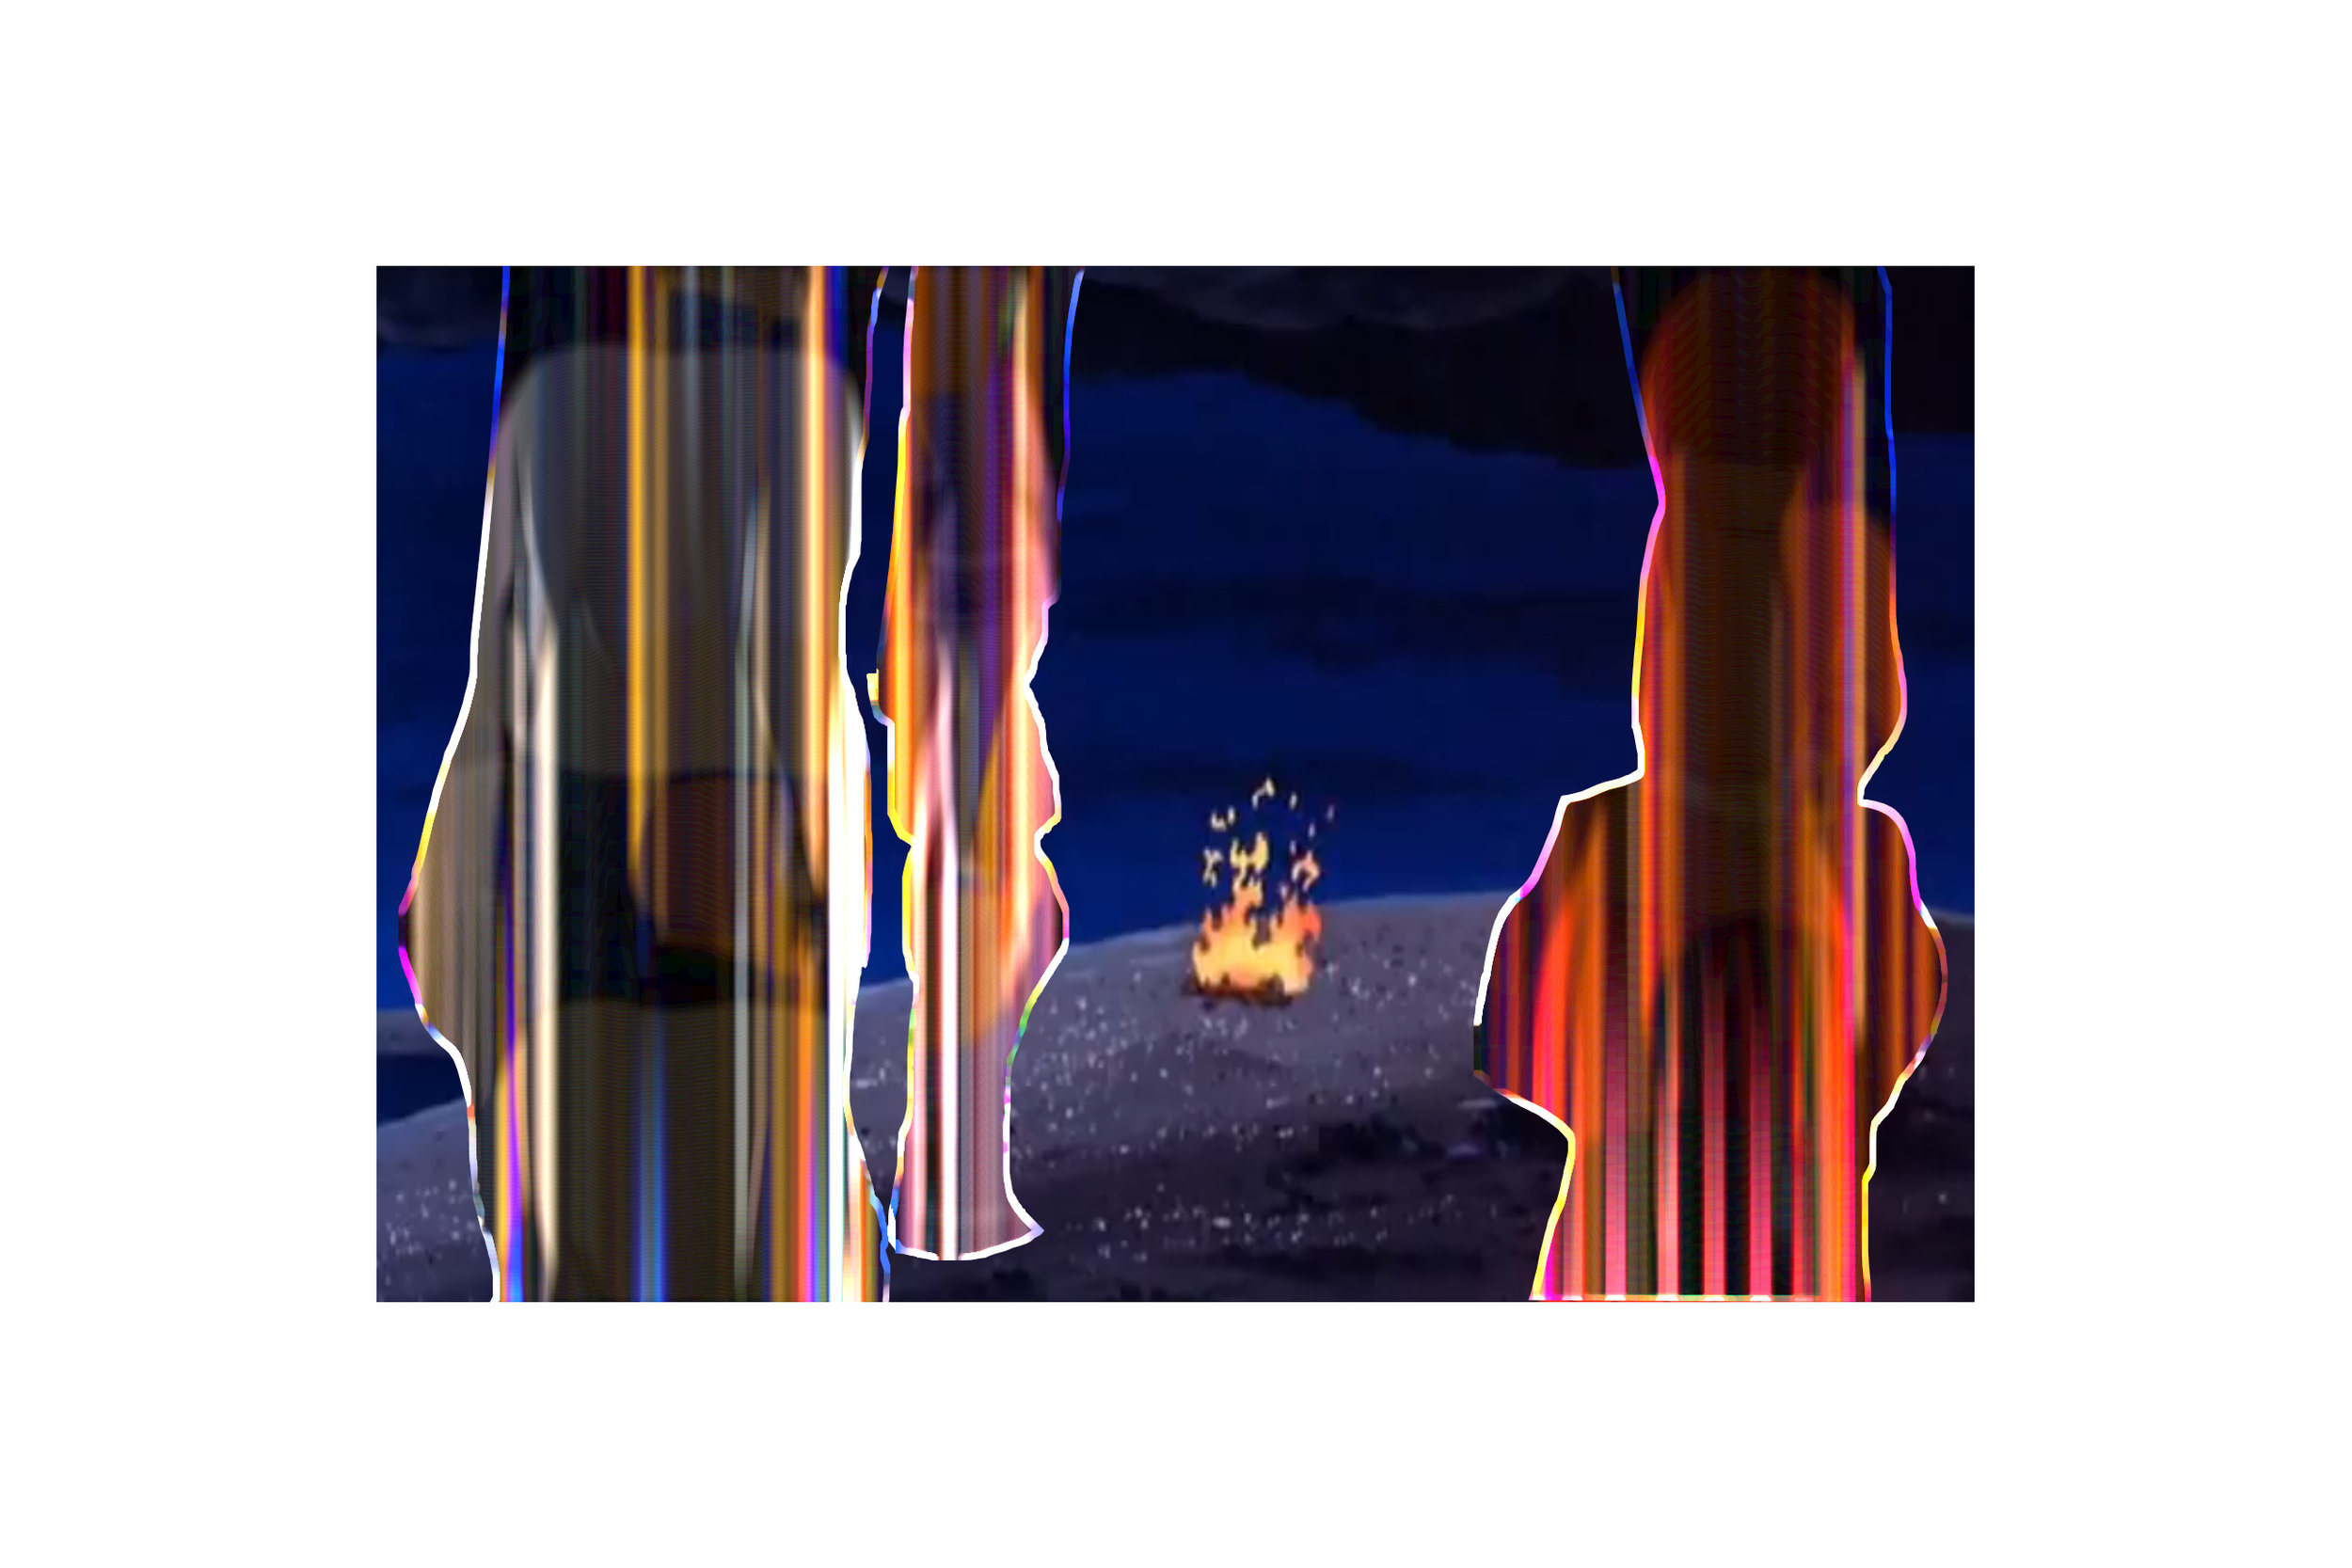 Conjurings, Digital Collage, 2013